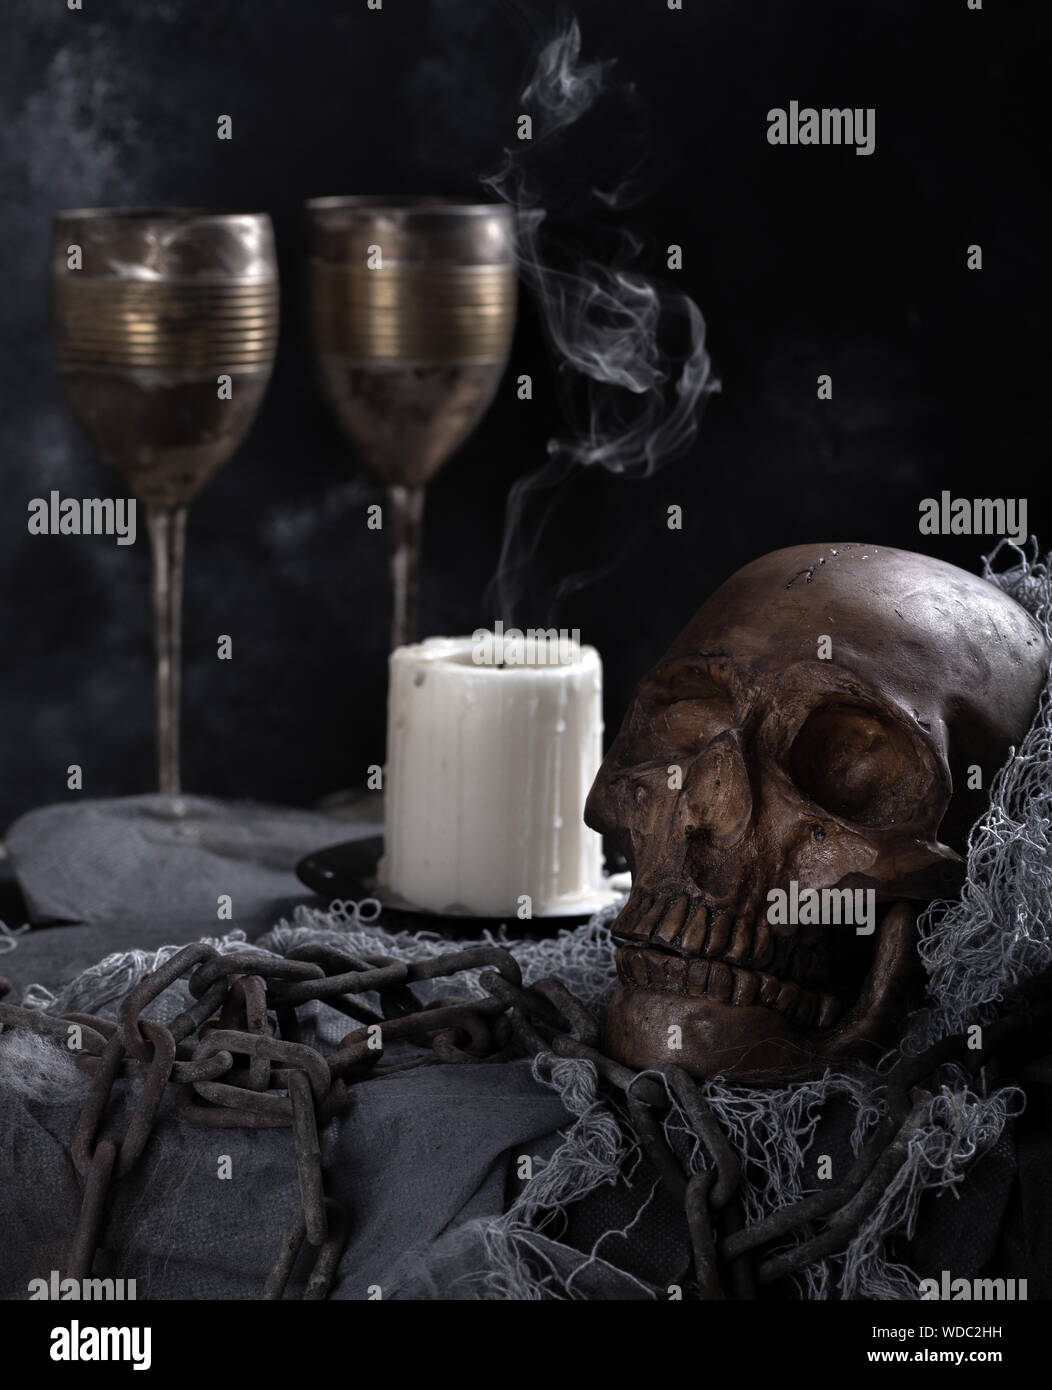 Scary teschio umano con candela senza fiamma e vintage calici in uno sfondo scuro. Foto Stock